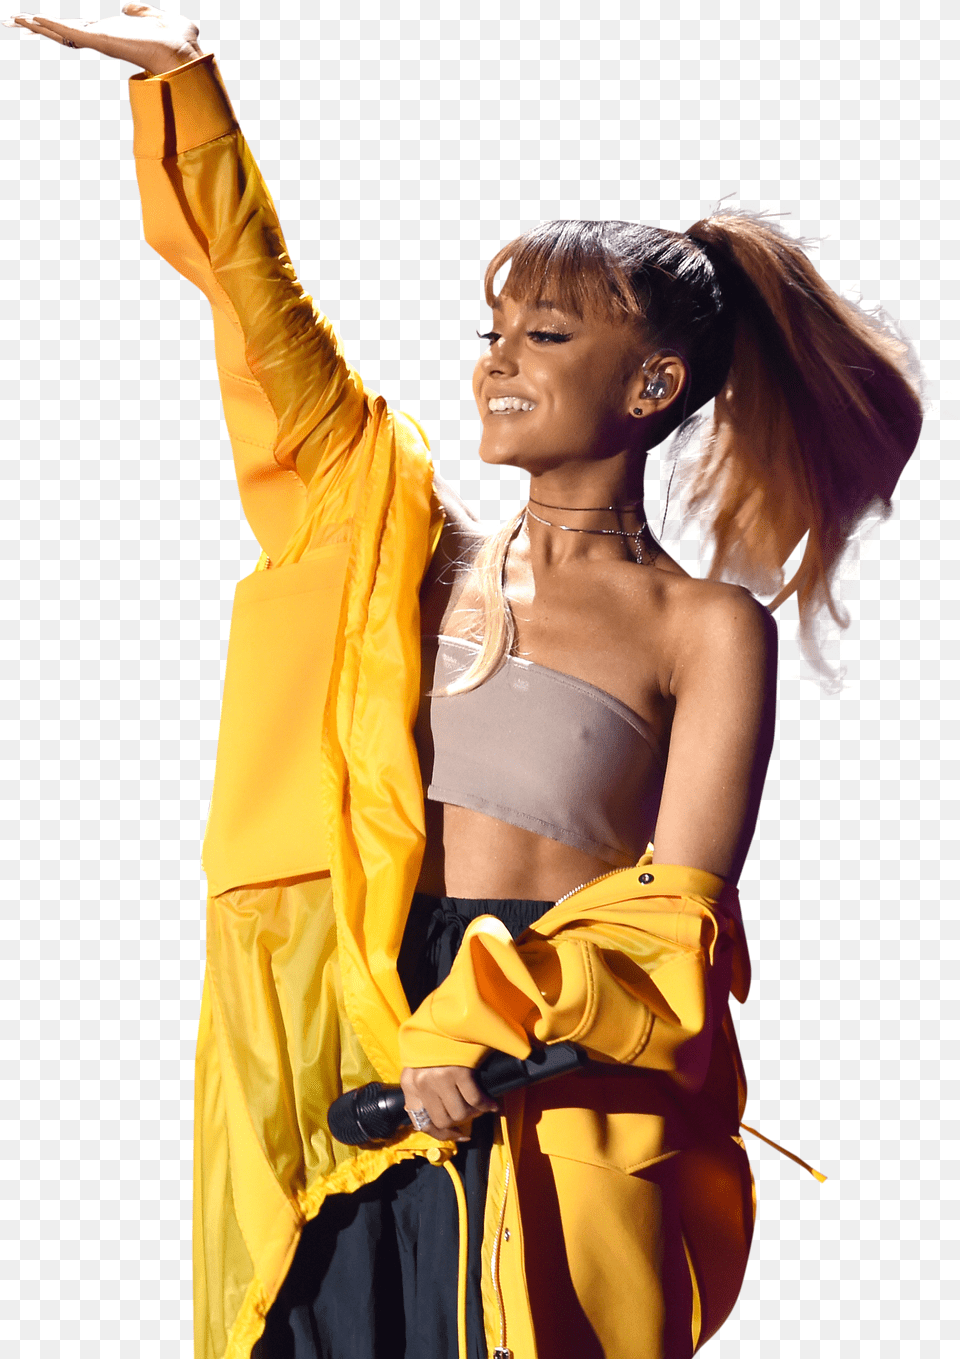 Ariana Grande In Yellow Dress Transparent Ariana Grande Png